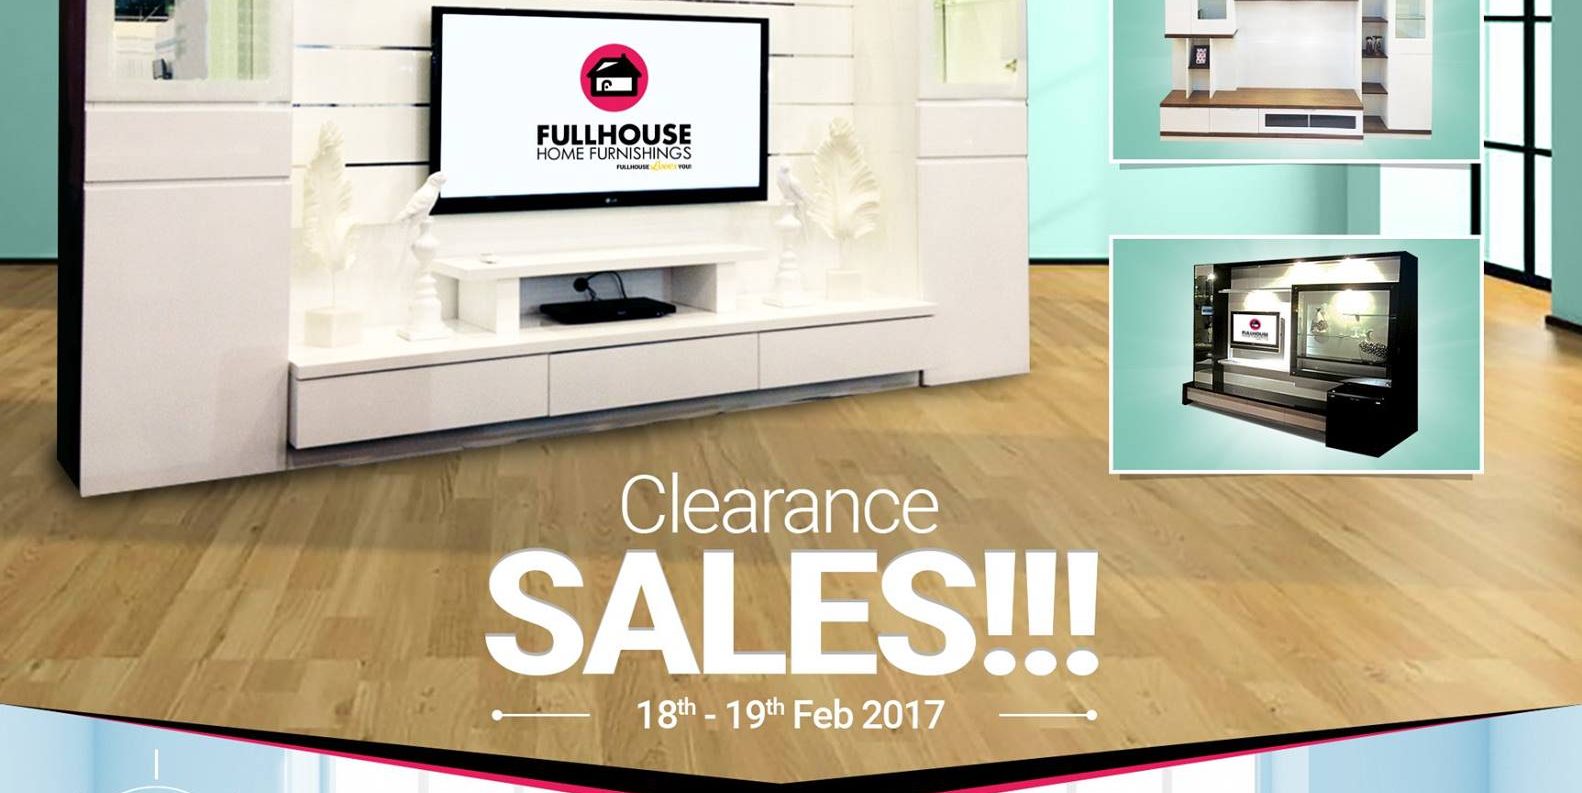 Fullhouse Home Furnishings Singapore Huge Huge Clearance Sales Promotion 18-19 Feb 2017